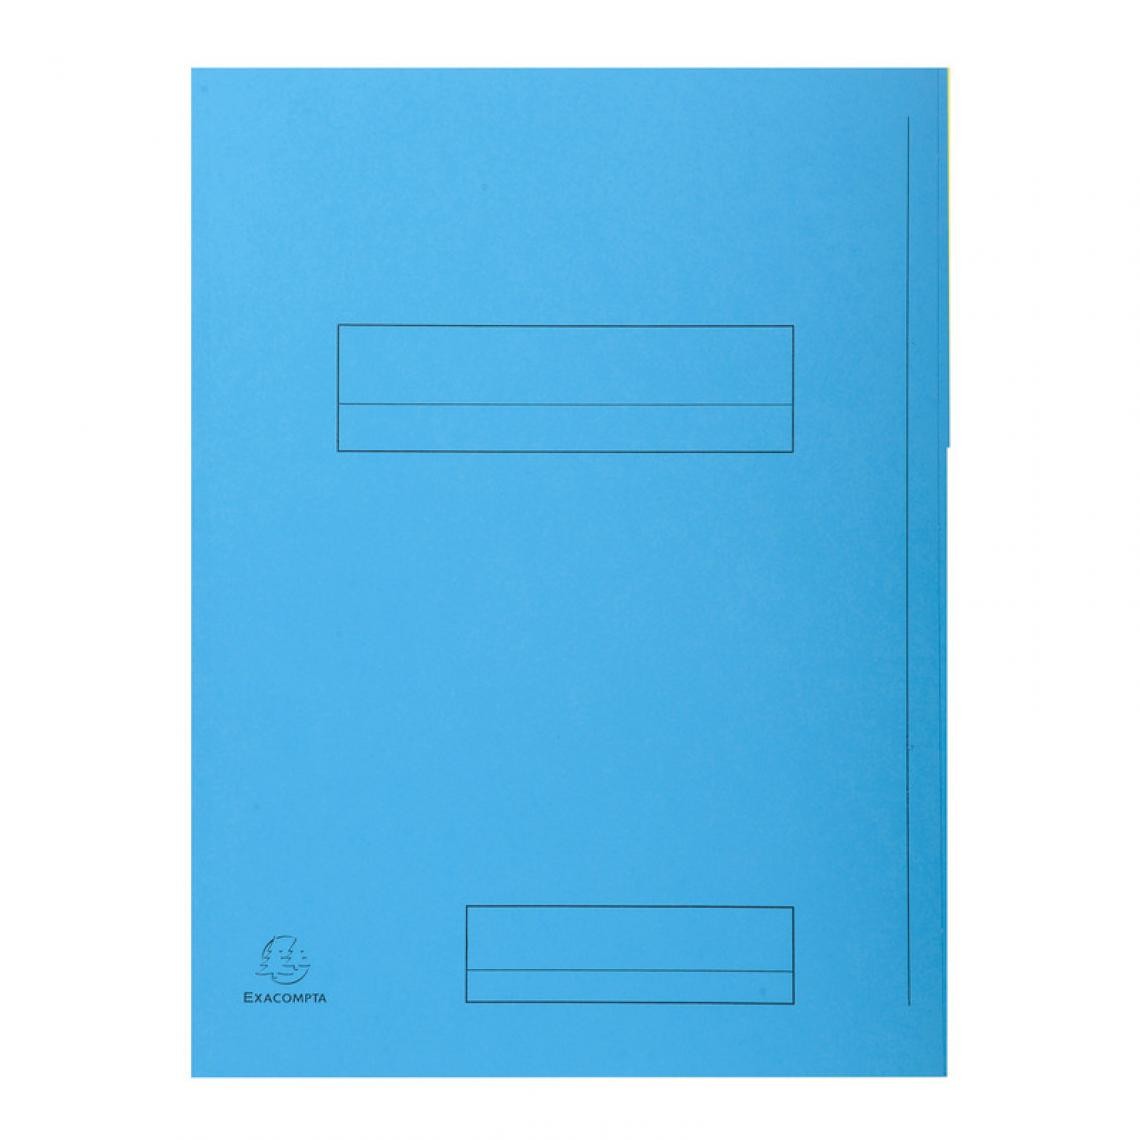 Exacompta - EXACOMPTA Chemises SUPER 250 imprimées, A4, bleu clair () - Accessoires Bureau